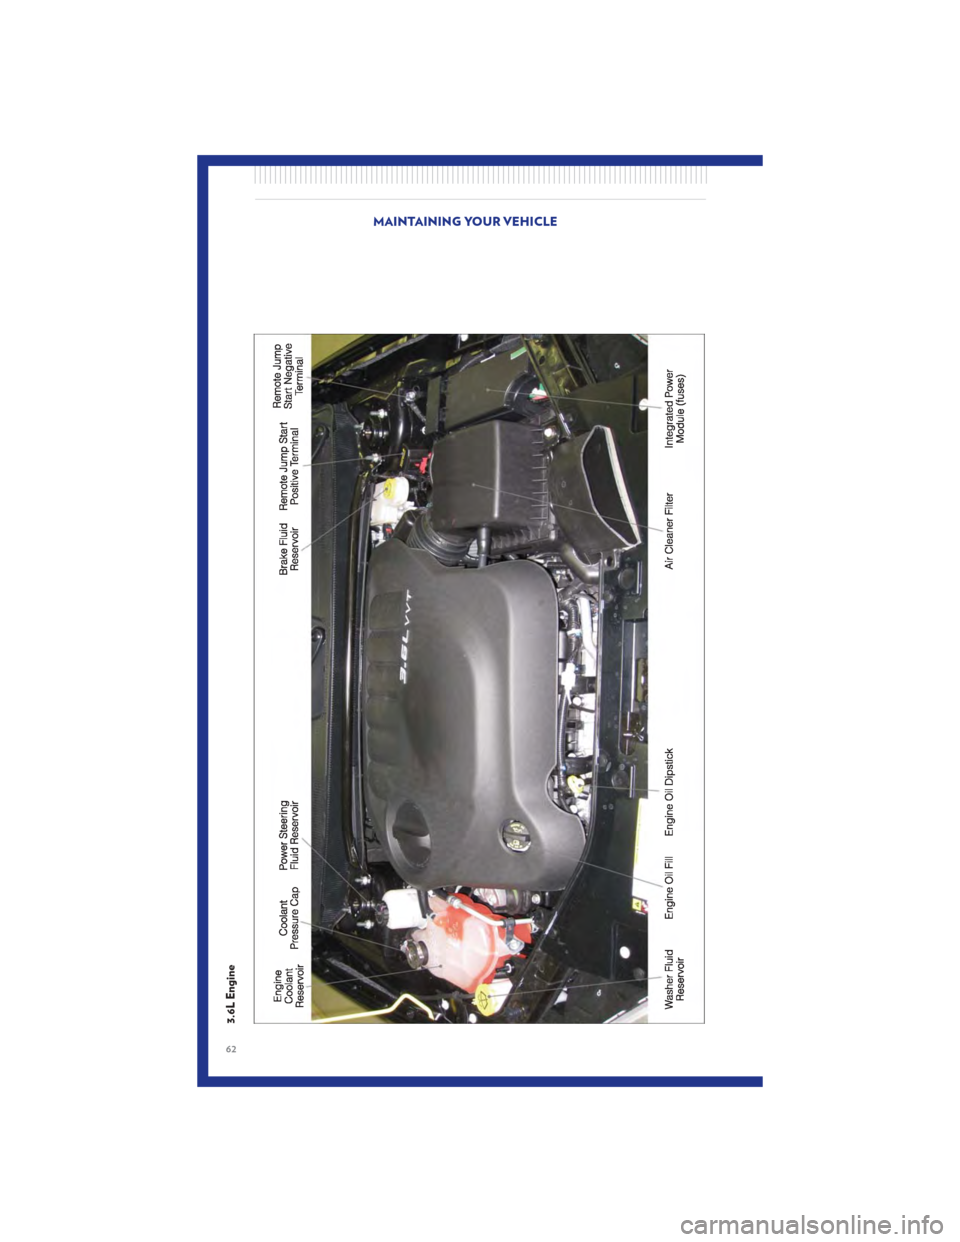 CHRYSLER 200 CONVERTIBLE 2011 1.G Repair Manual 3.6L Engine
MAINTAINING YOUR VEHICLE
62 